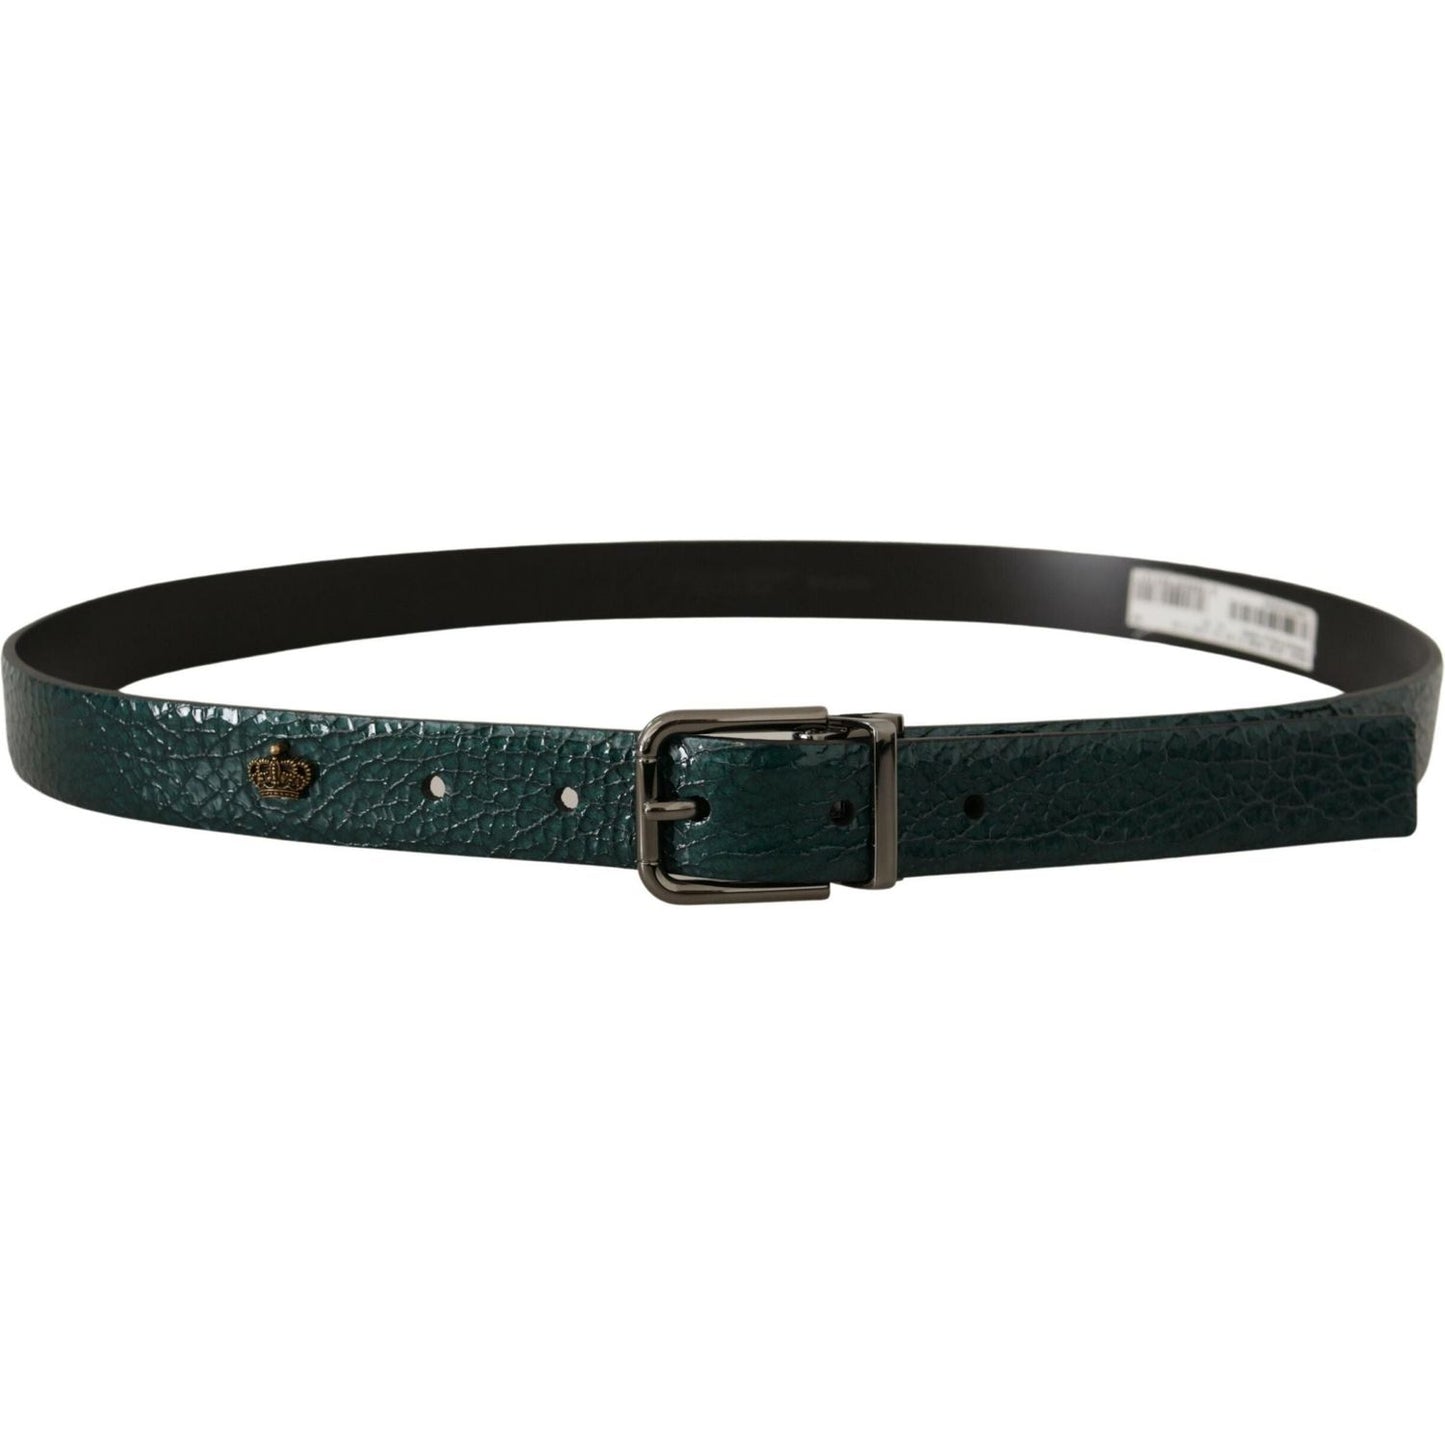 Dolce & Gabbana Elegant Green Leather Belt with Silver Buckle belt-green-vernice-foglia-leather-casual-dress IMG_7996-1-scaled-f46b7182-bae.jpg